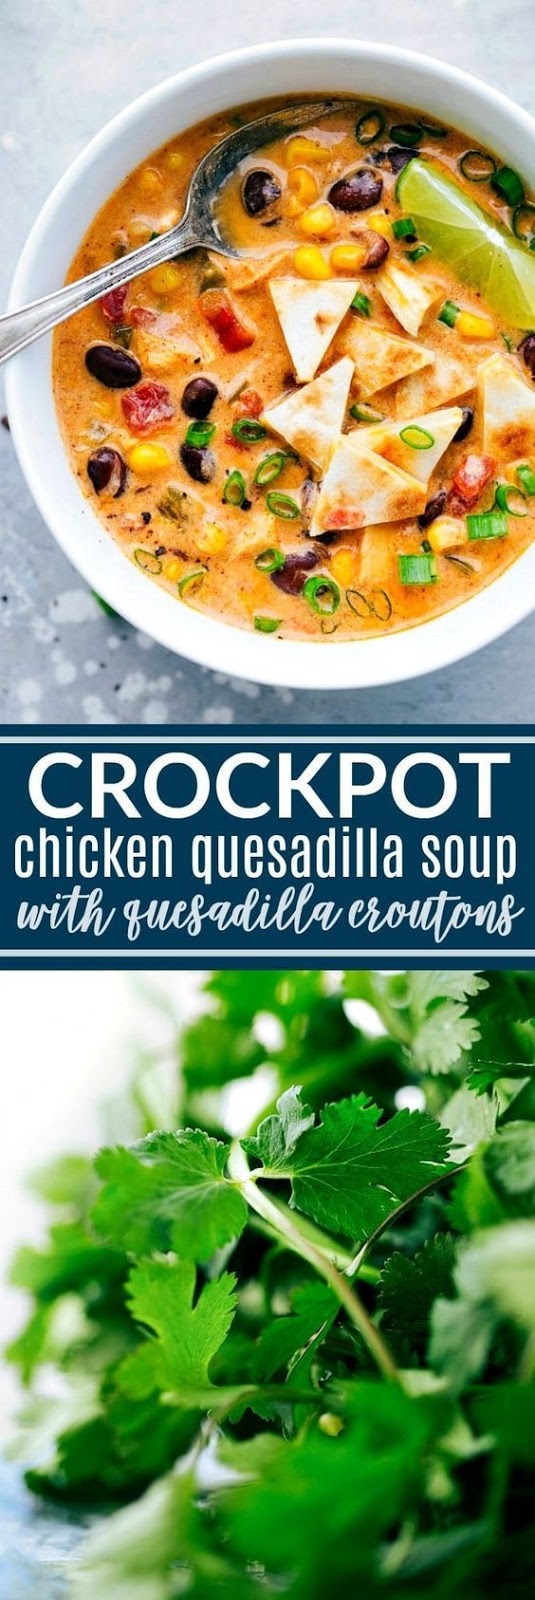 Crockpot Chicken Quesadilla Soup